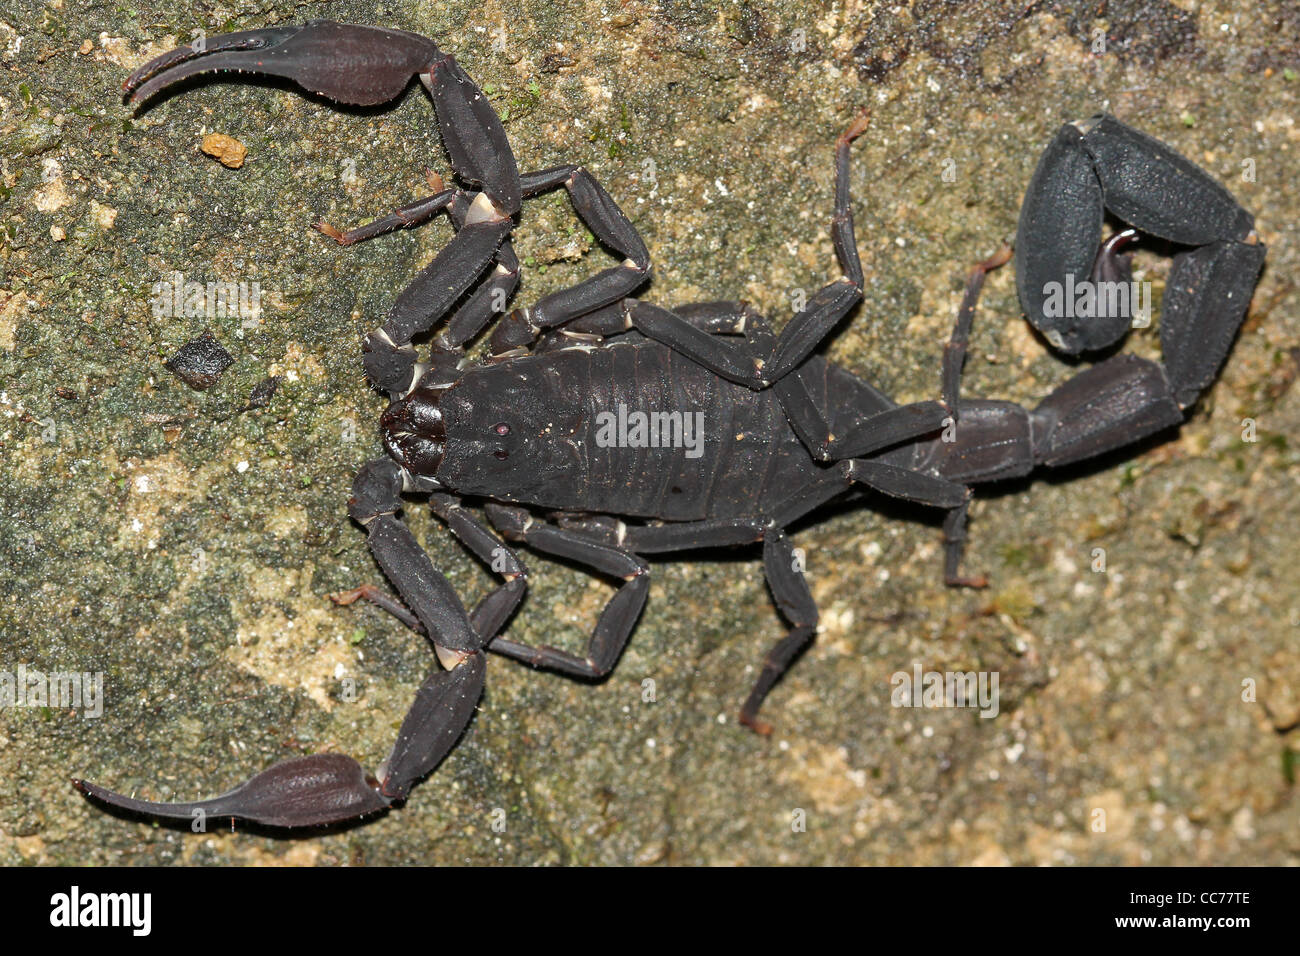 A DEADLY scorpion in the Peruvian Amazon Stock Photo